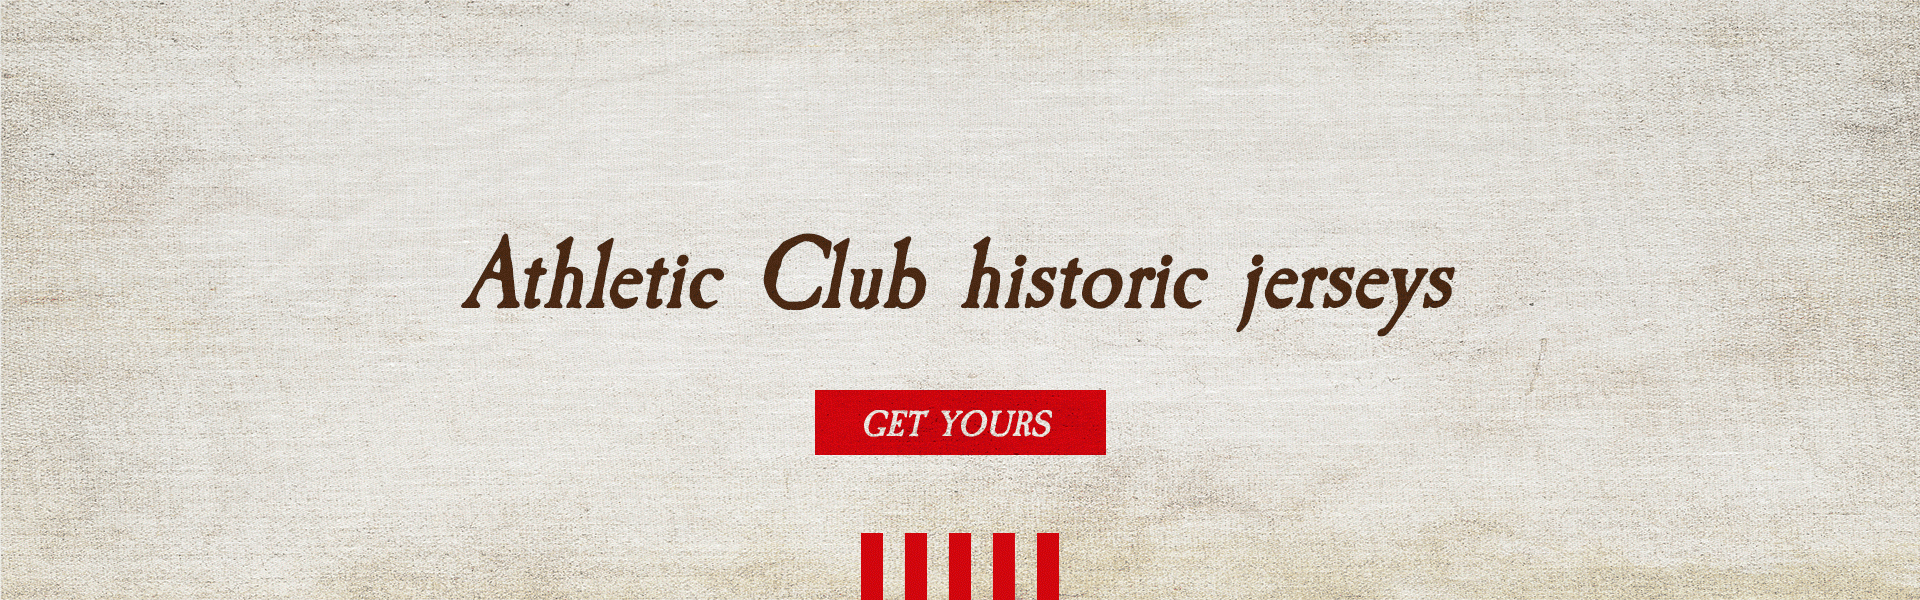 Athletic Club historic jerseys